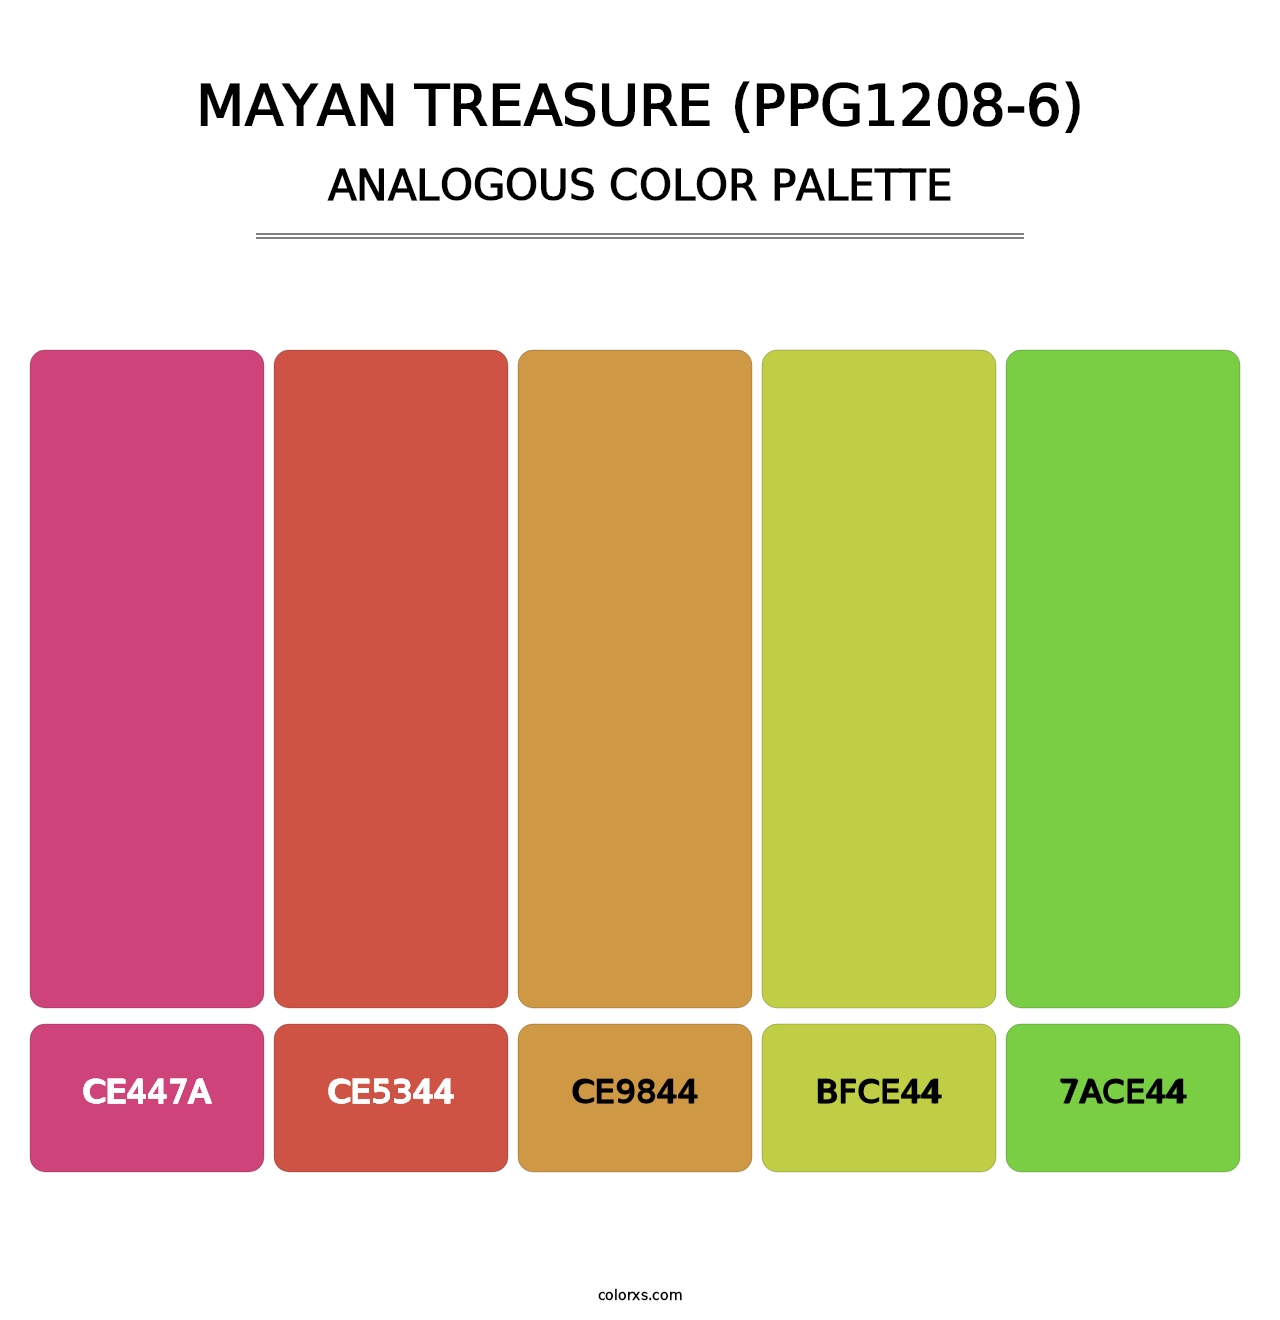 Mayan Treasure (PPG1208-6) - Analogous Color Palette